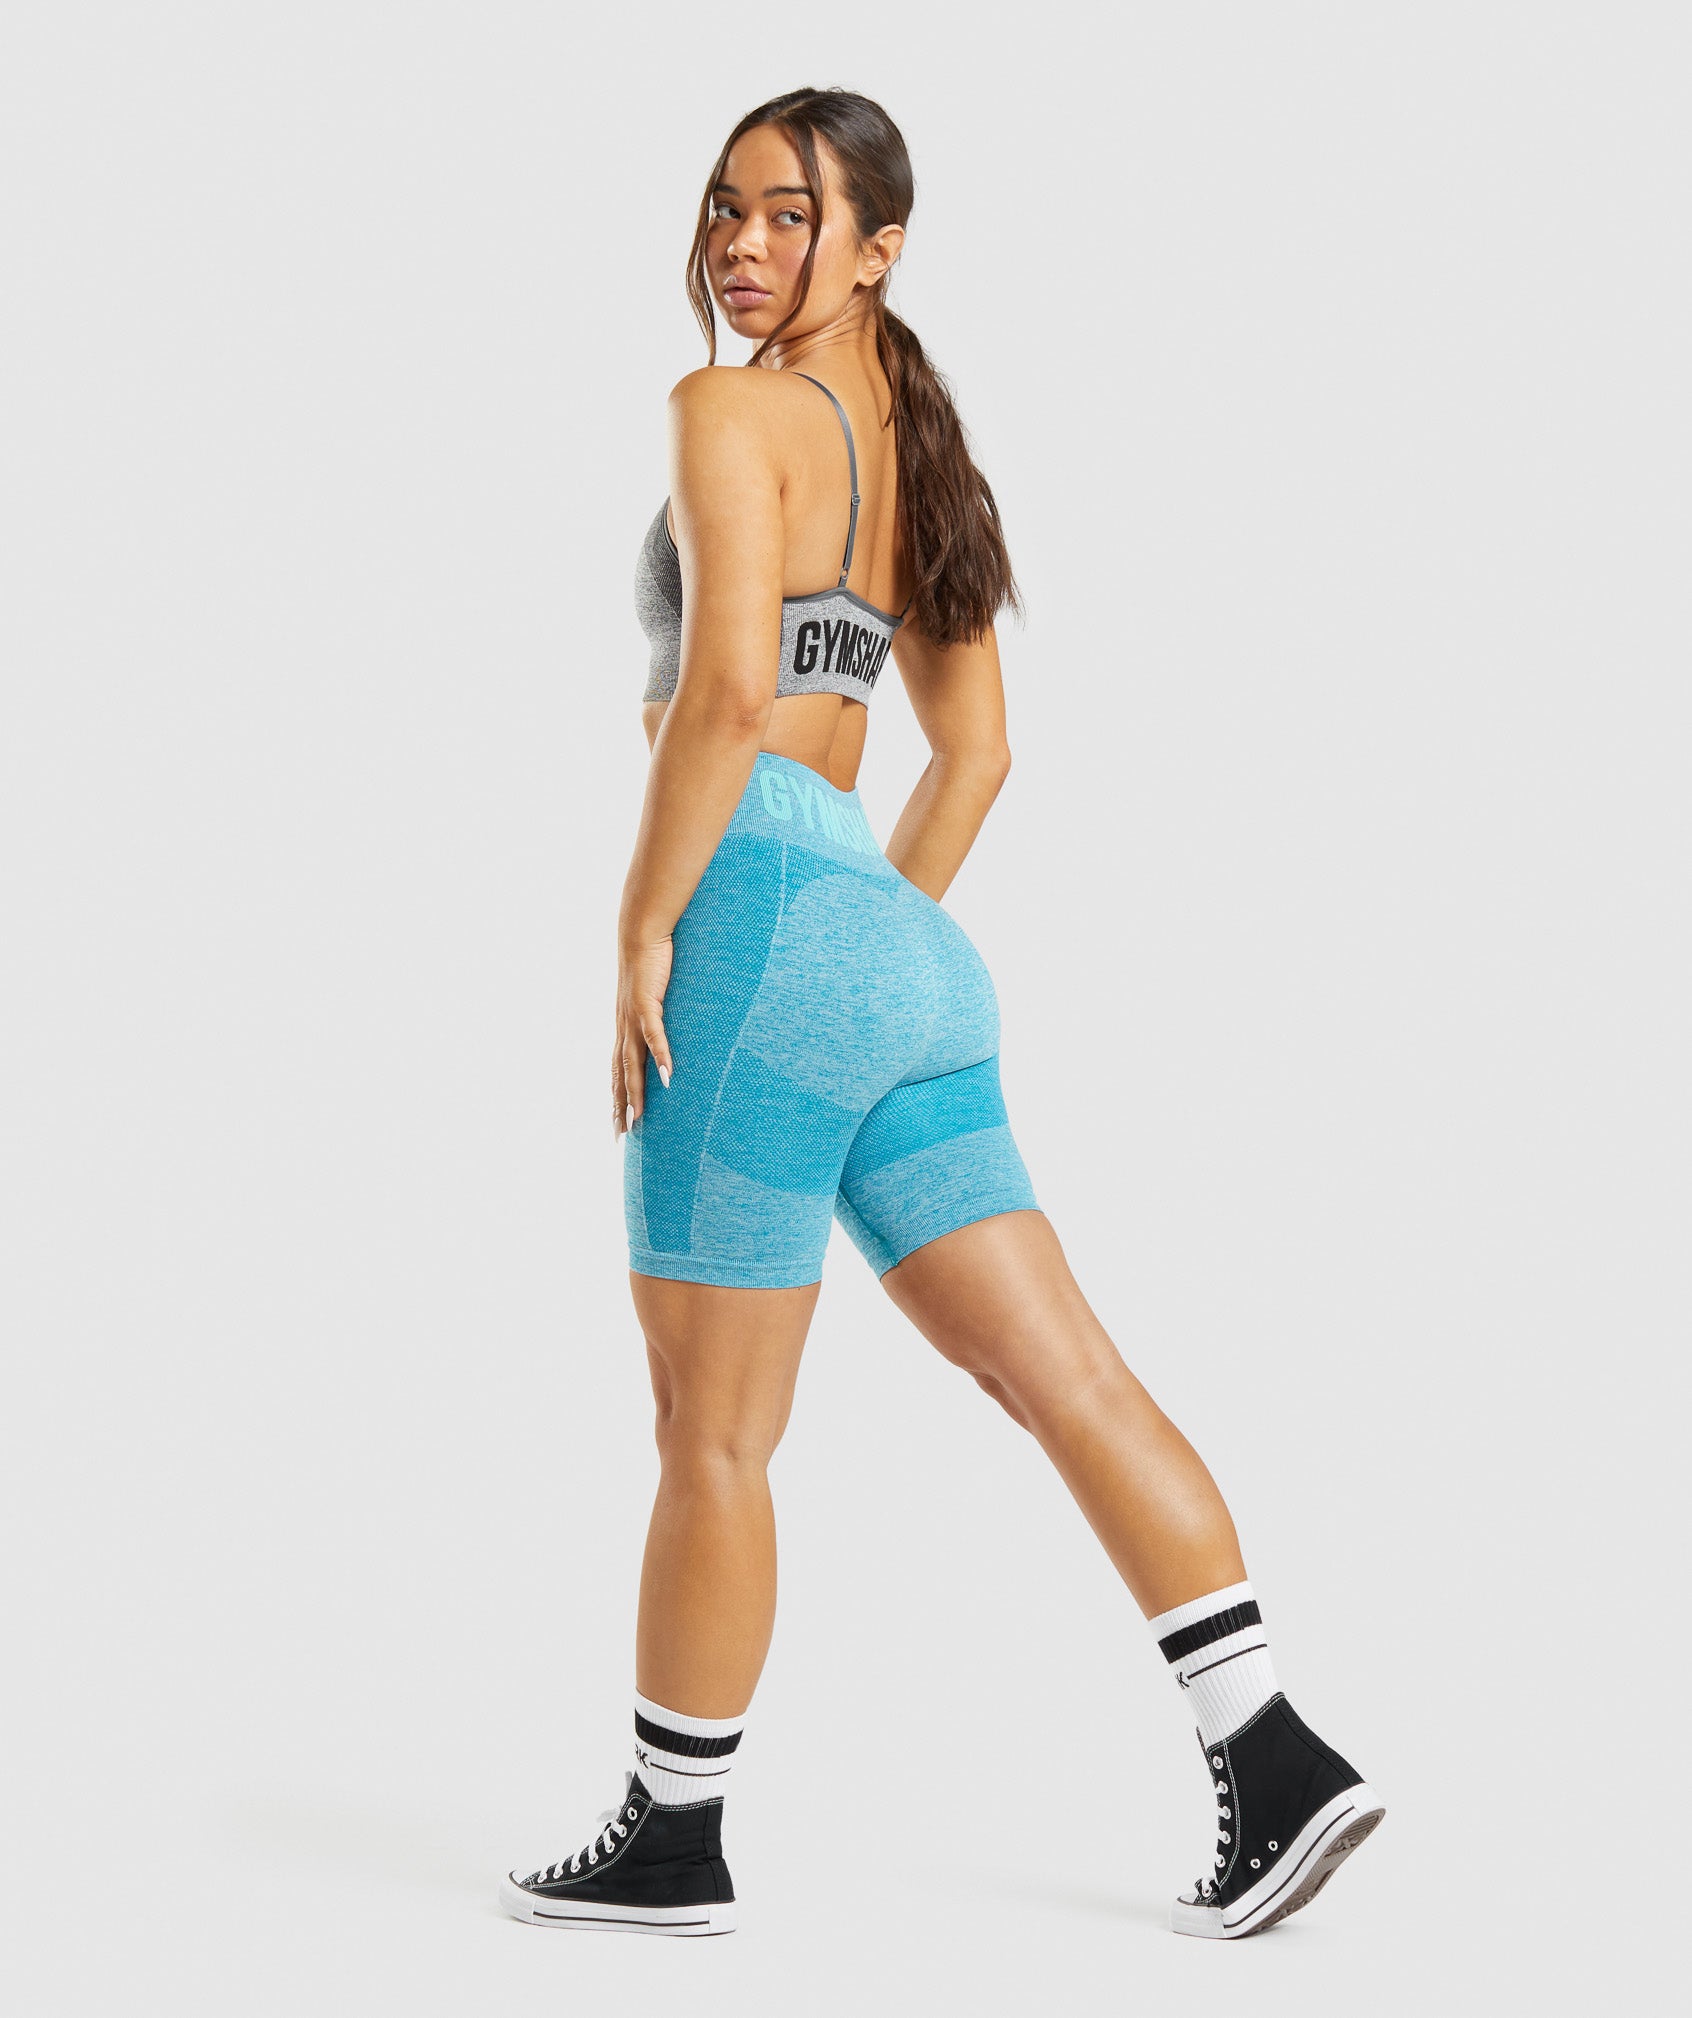 Gymshark Flex cycling shorts size L